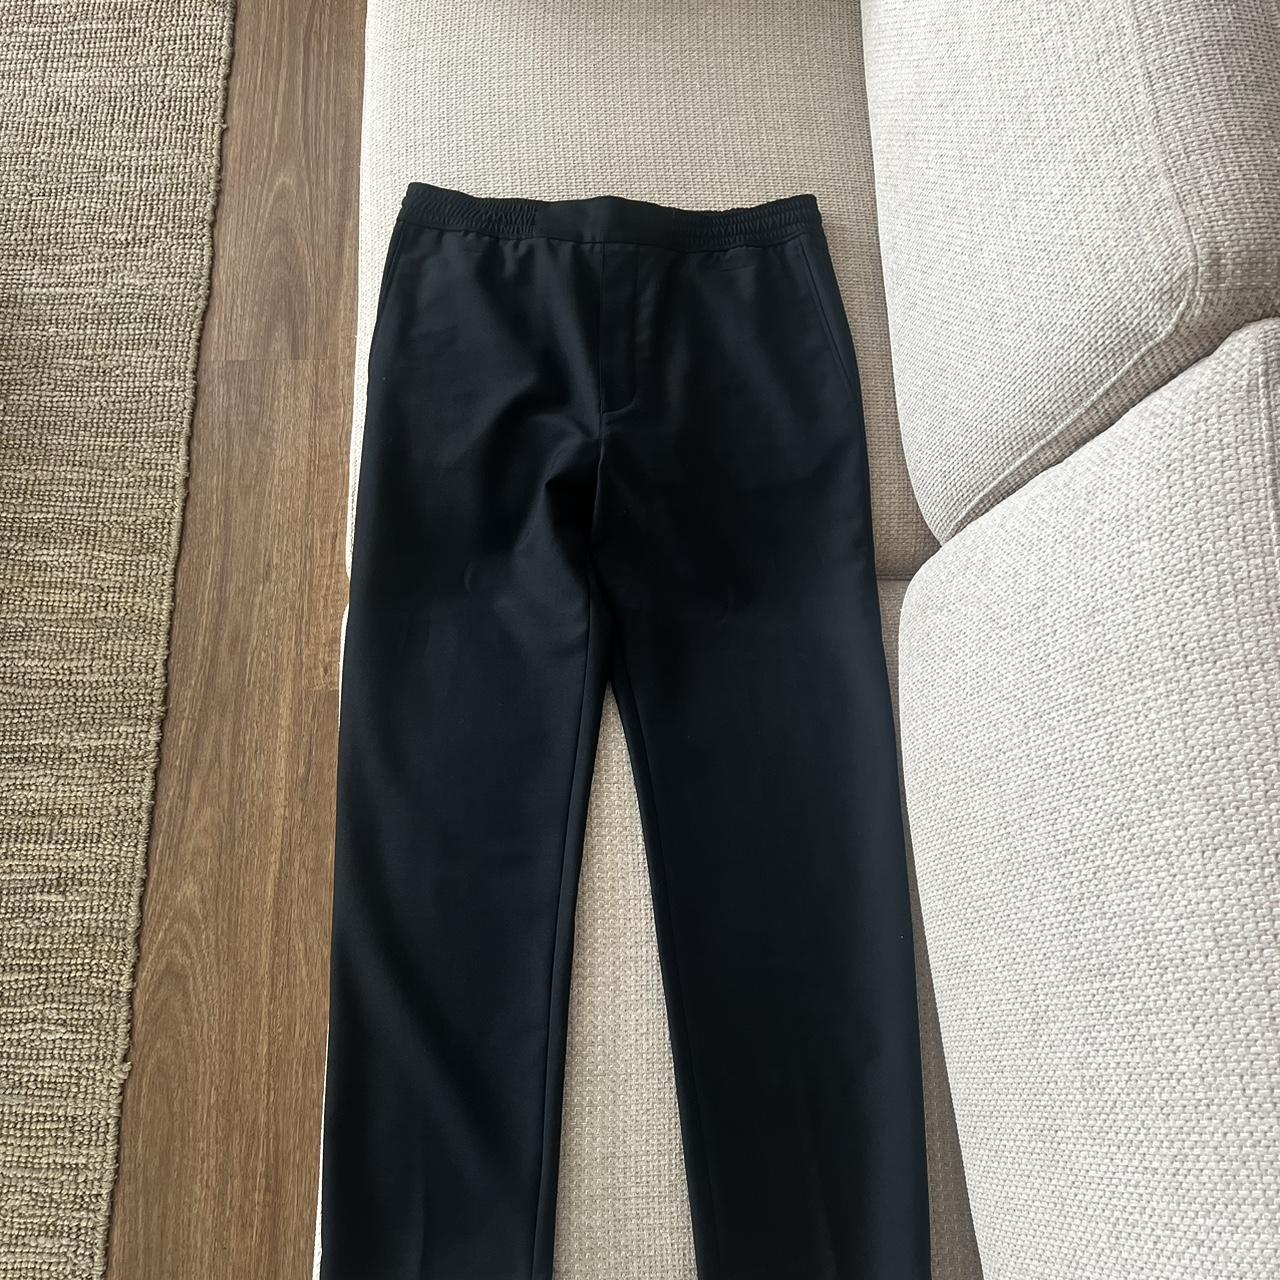 Acne Studios Trousers Size 48 - fits like a 30-32... - Depop